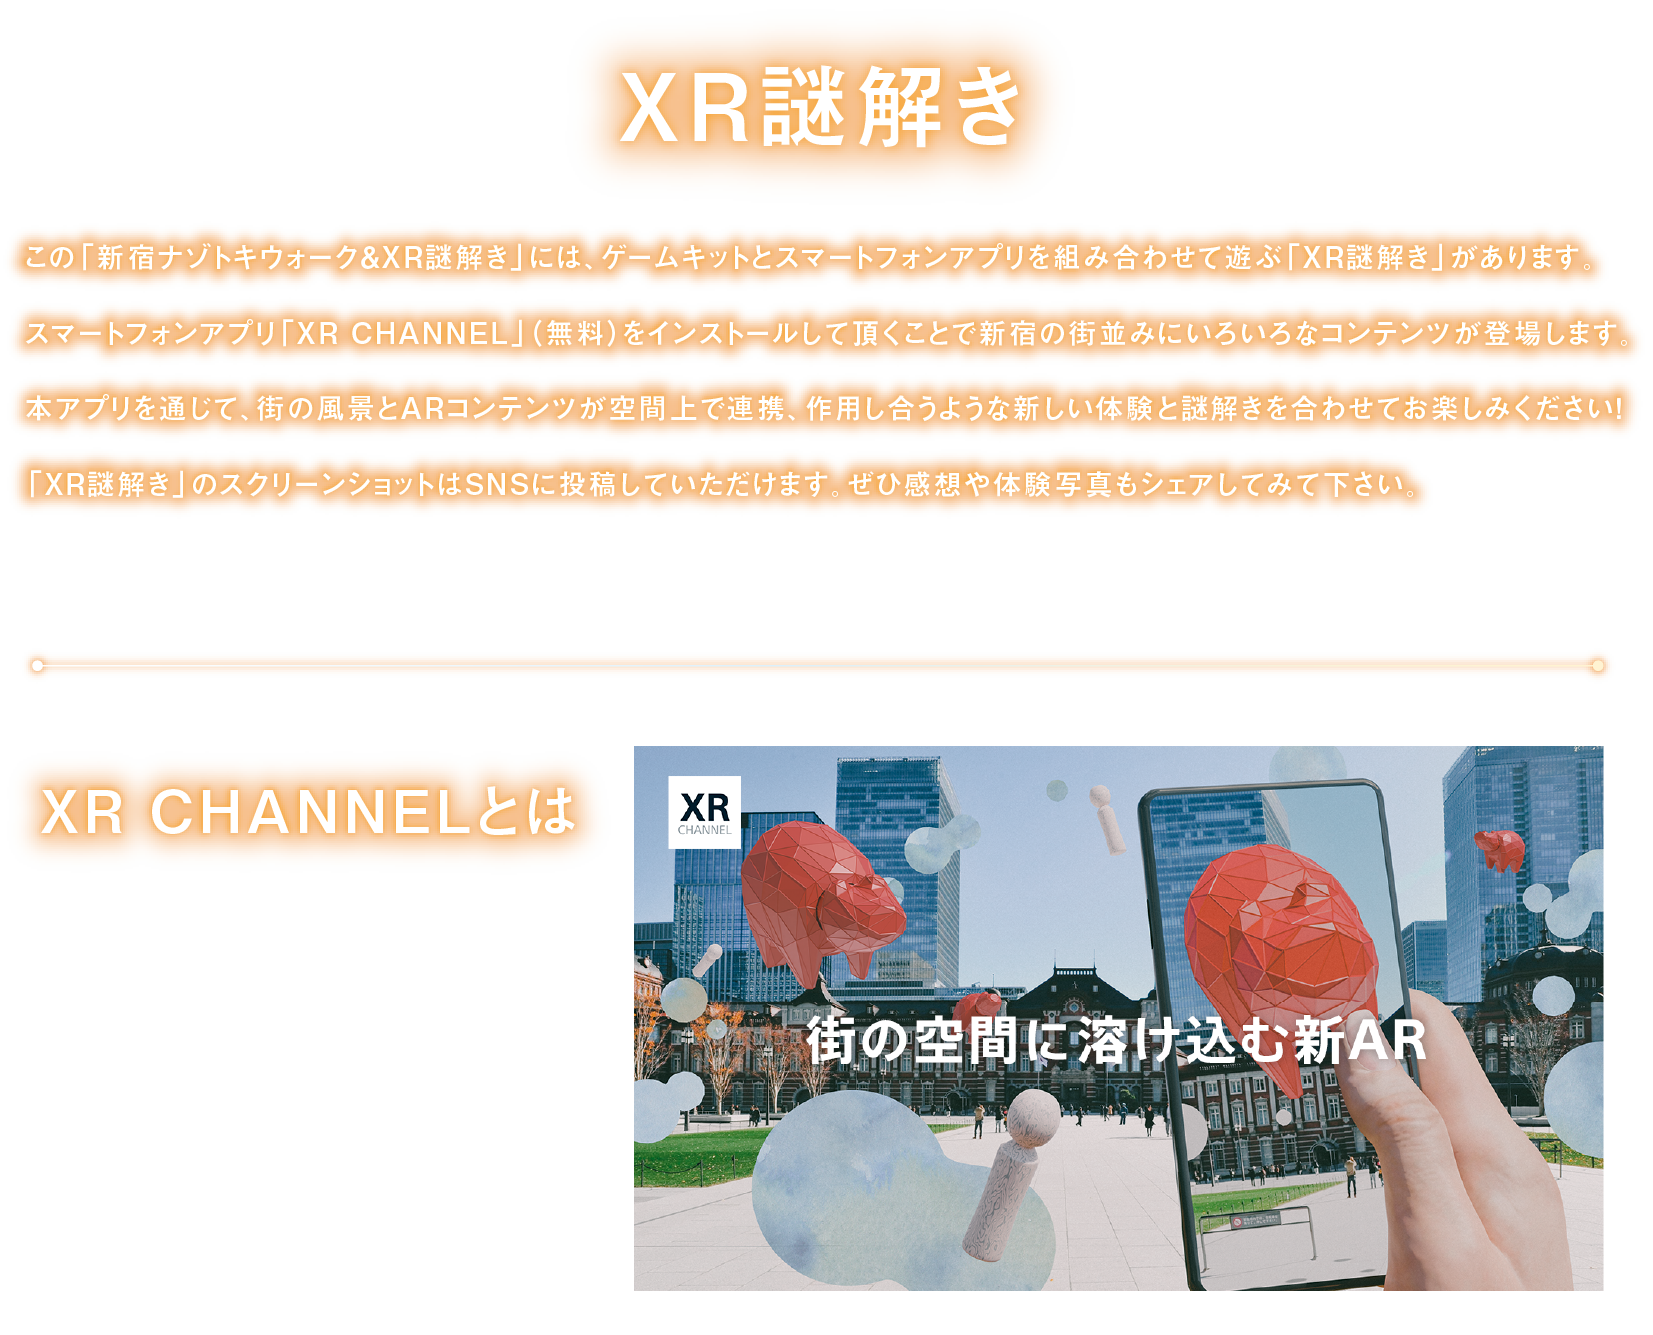 XR謎解き
「新宿ナゾトキウォーク＆XR謎解き」には、ゲームキットとスマートフォンアプリを組み合わせて遊ぶ「XR謎解き」があります。
スマートフォンアプリ「XR CHANNEL」をインストールして頂くことで、街の風景とARコンテンツが空間上で連携、作用し合うような新しい体験と謎解きを合わせてお楽しみください